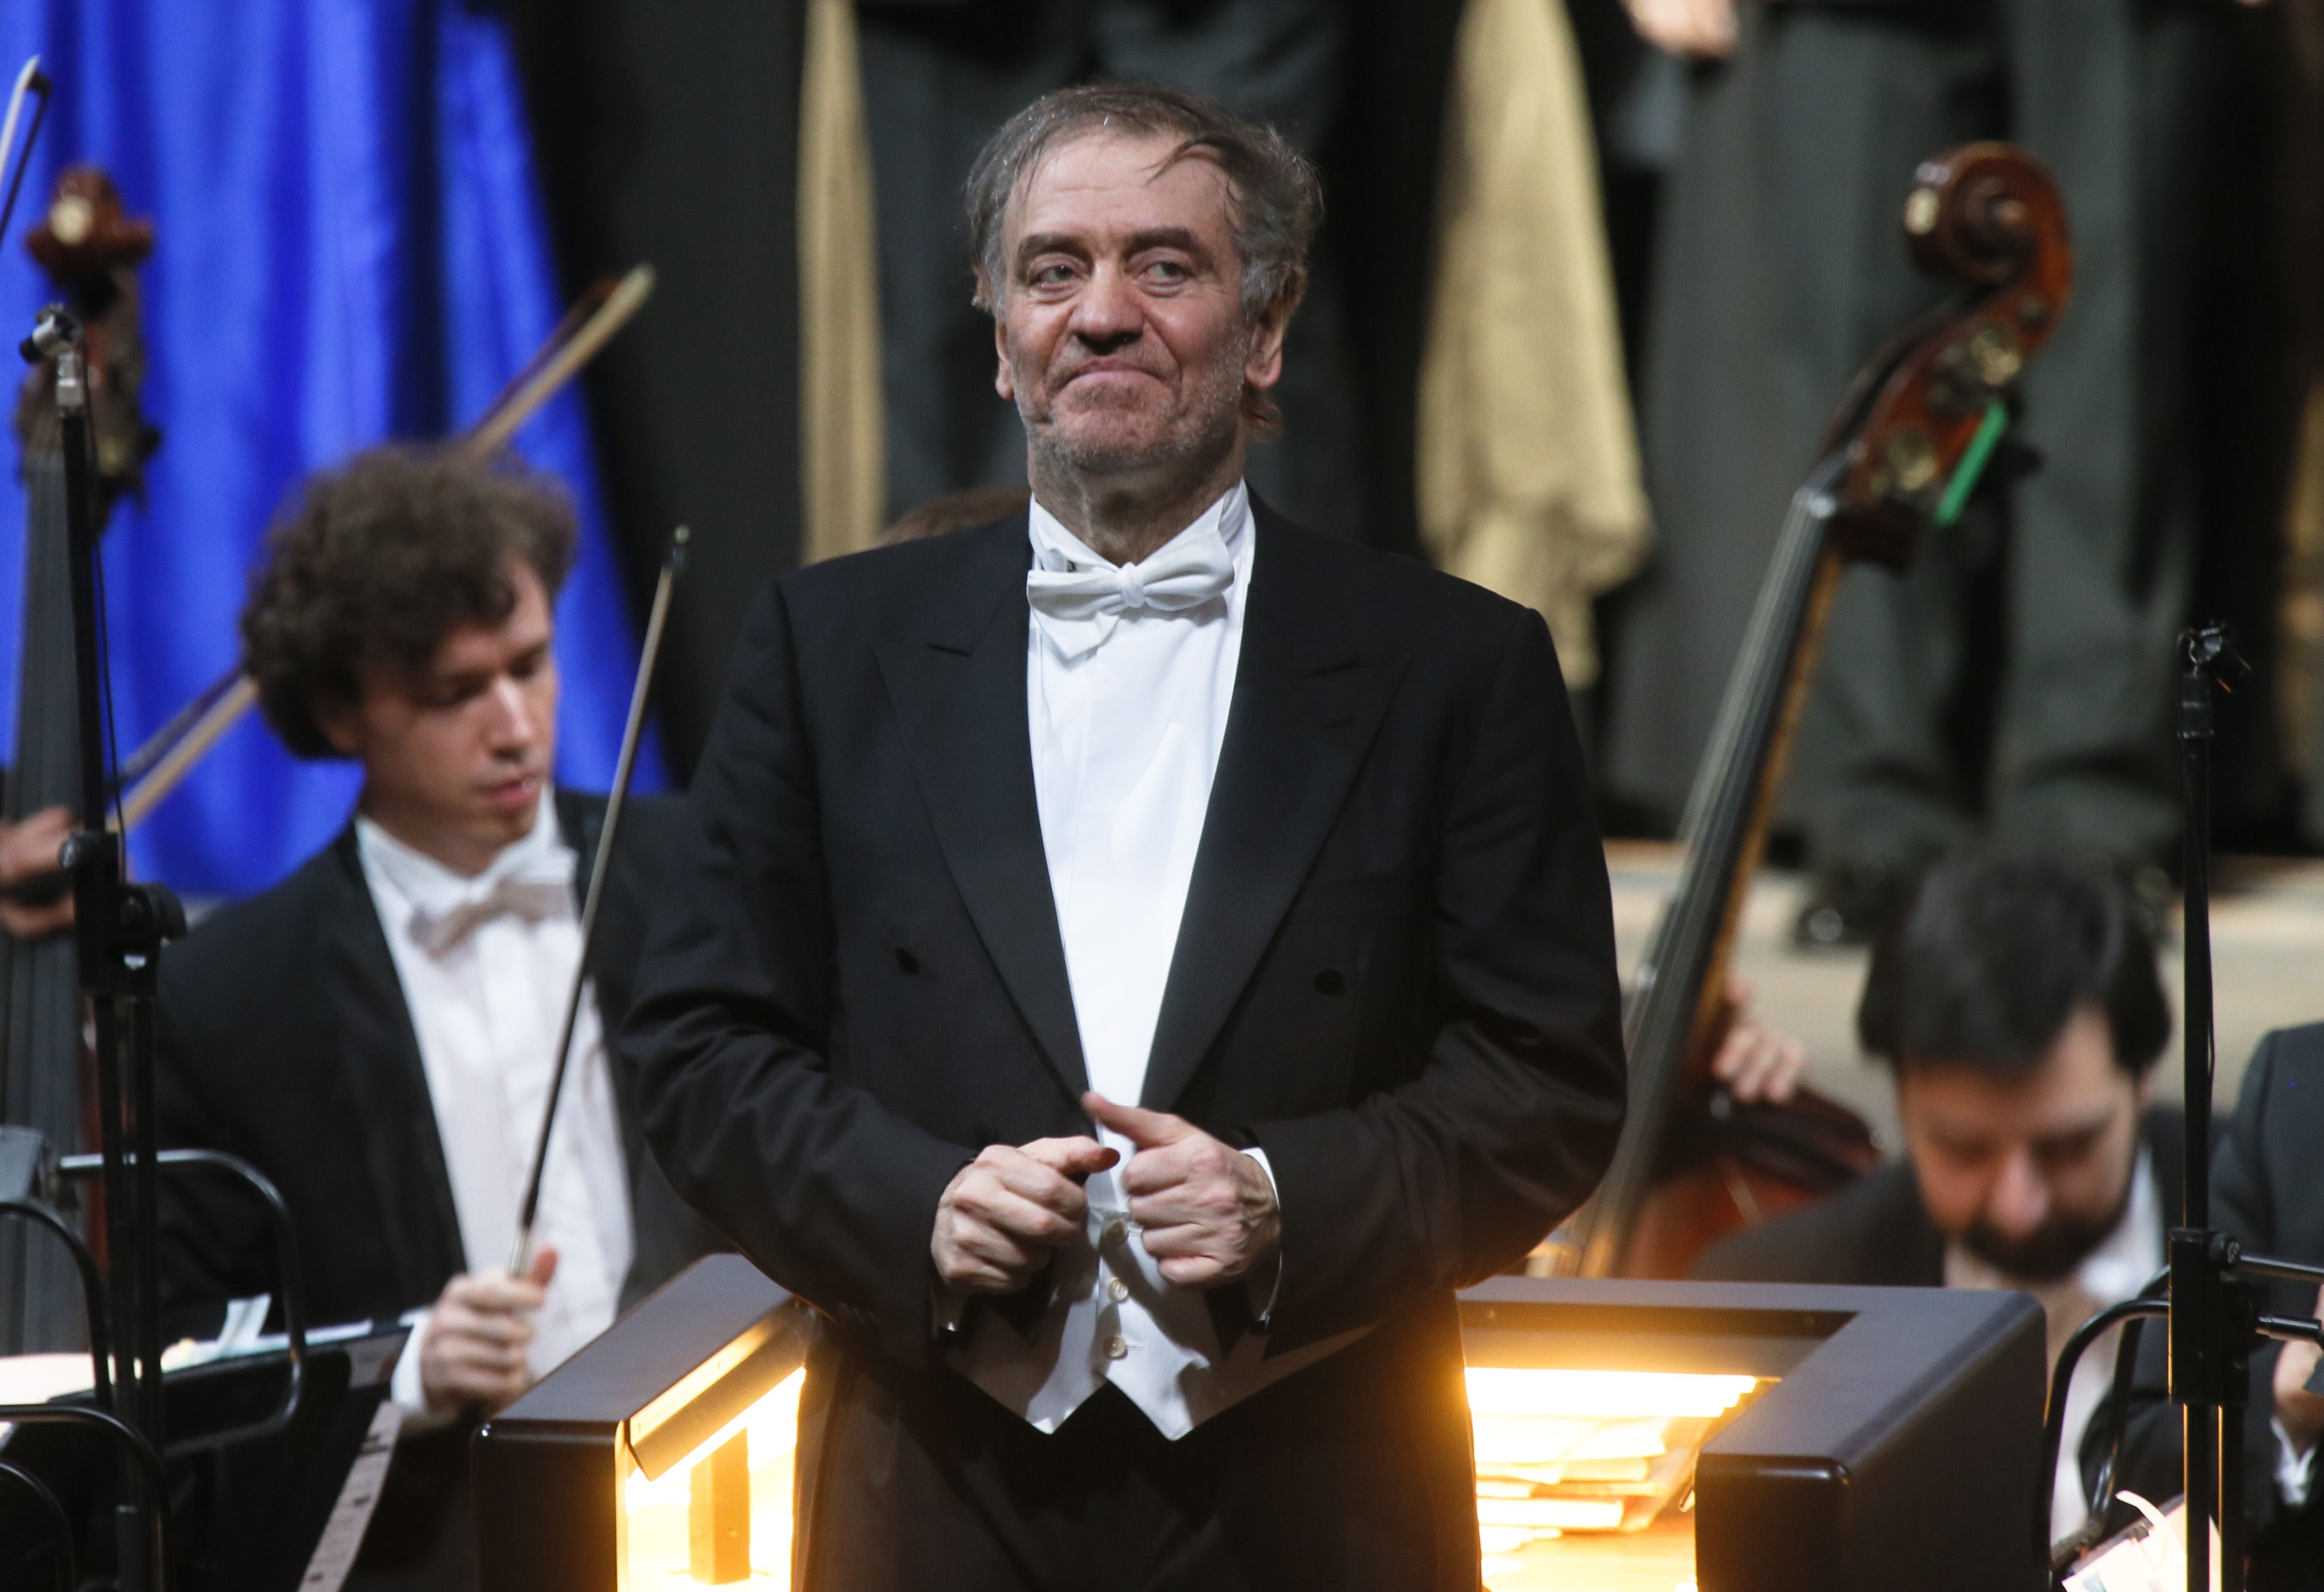 Gergiev, Putin friend, out of Vienna Philharmonic US tour